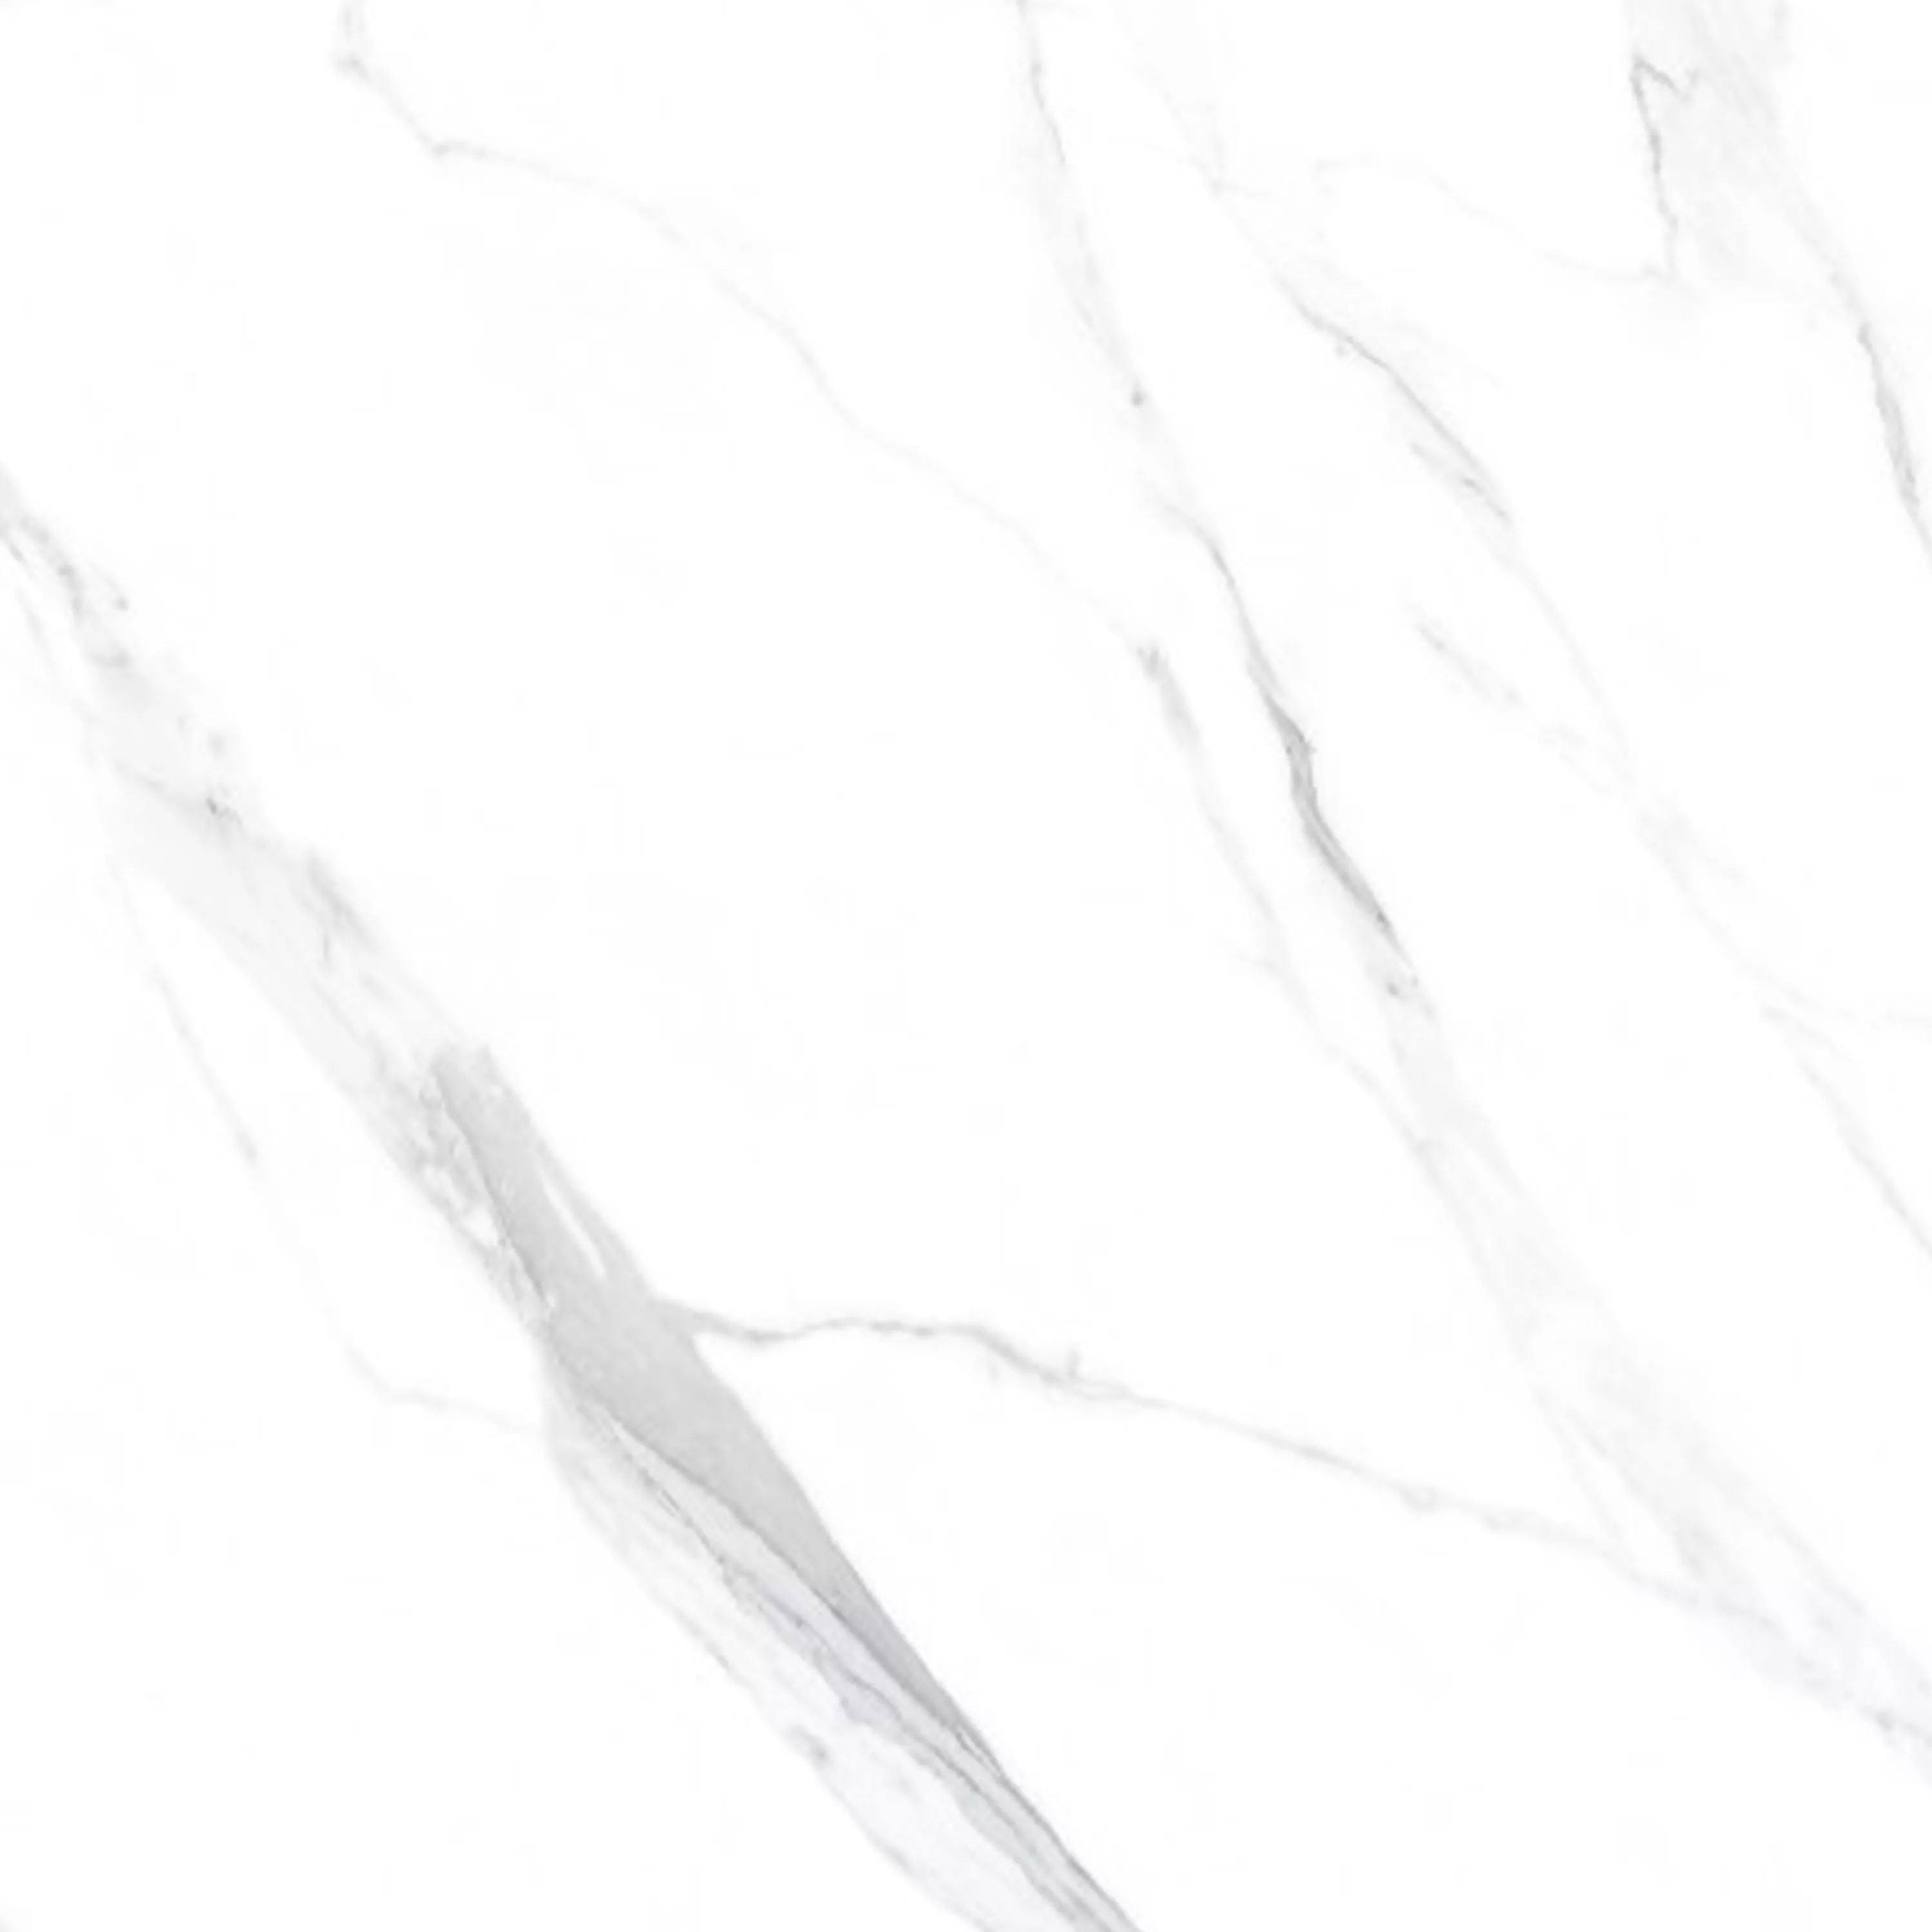 Vzorek Podlahové Dlaždice Serenity Mramorový Vzhled Leštěná Bílá 60x60cm